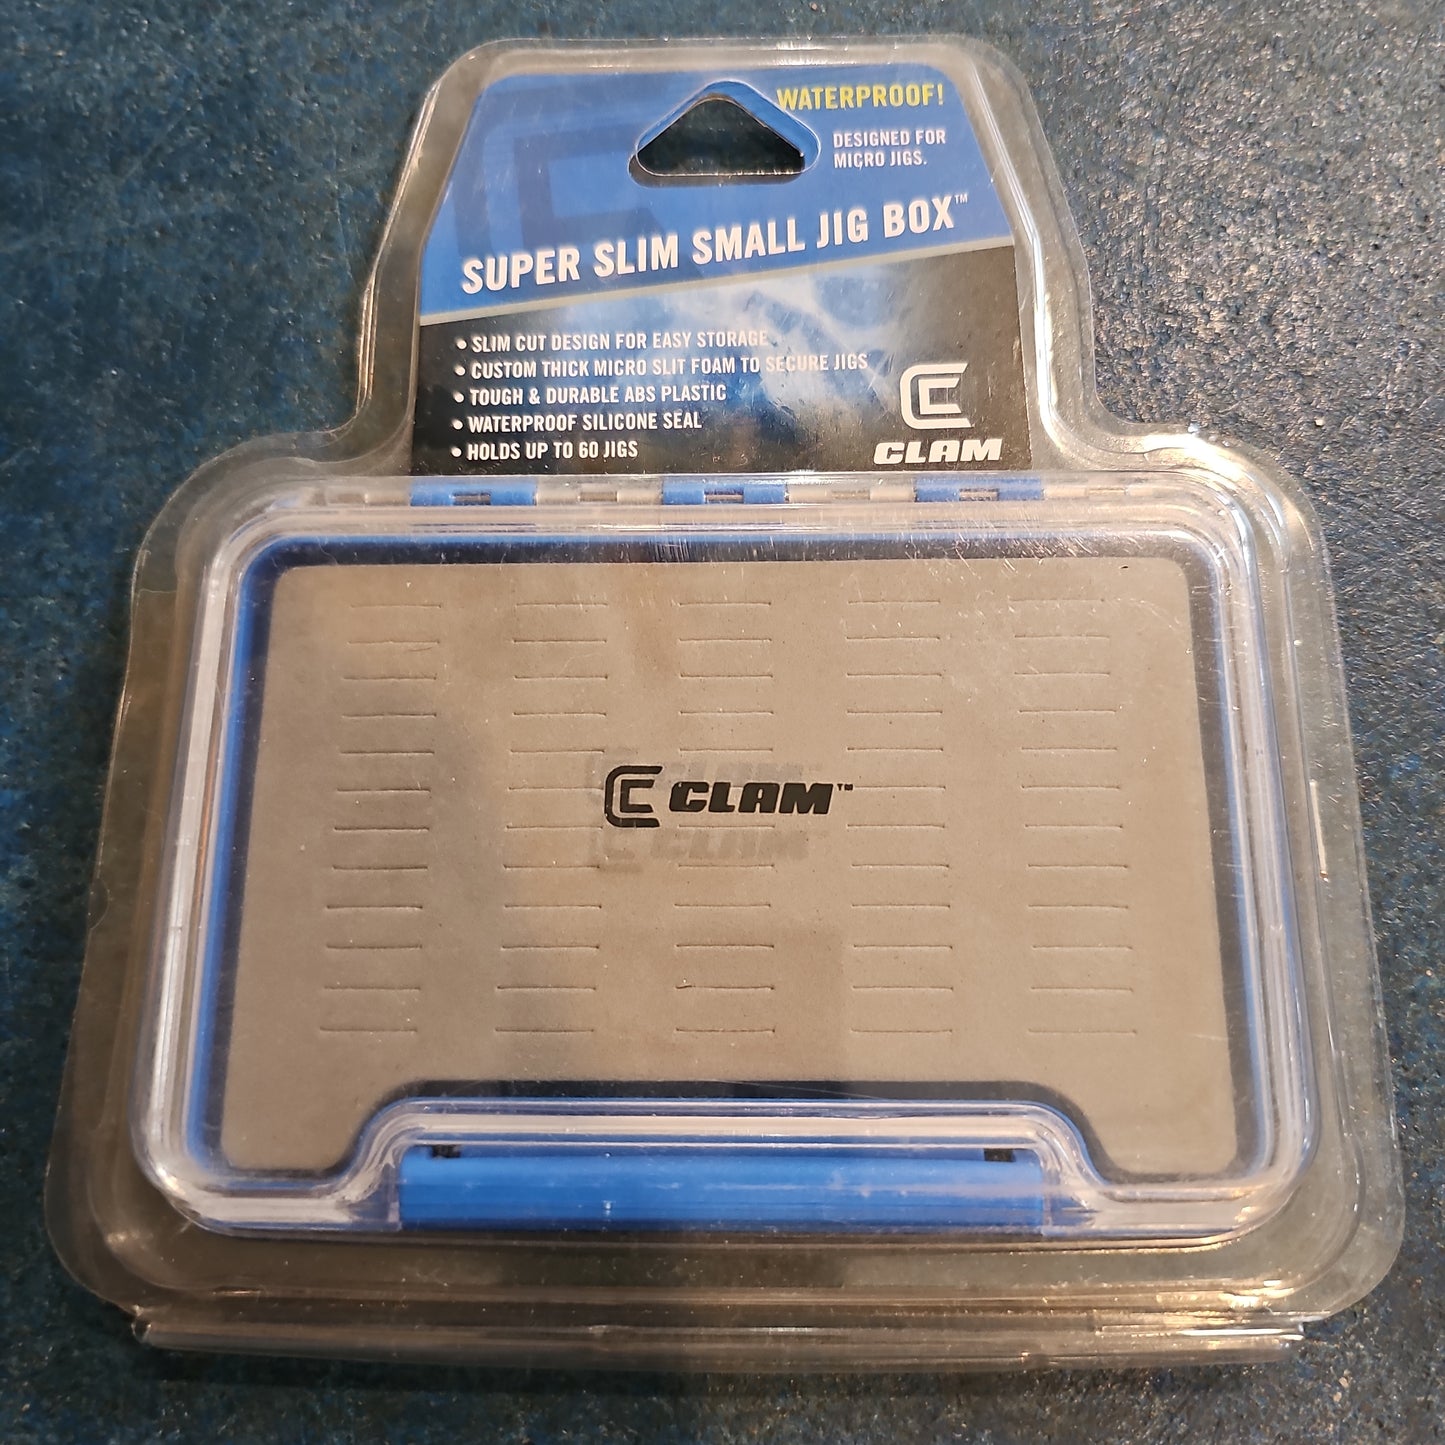 Clam Super Slim Small Jig Box